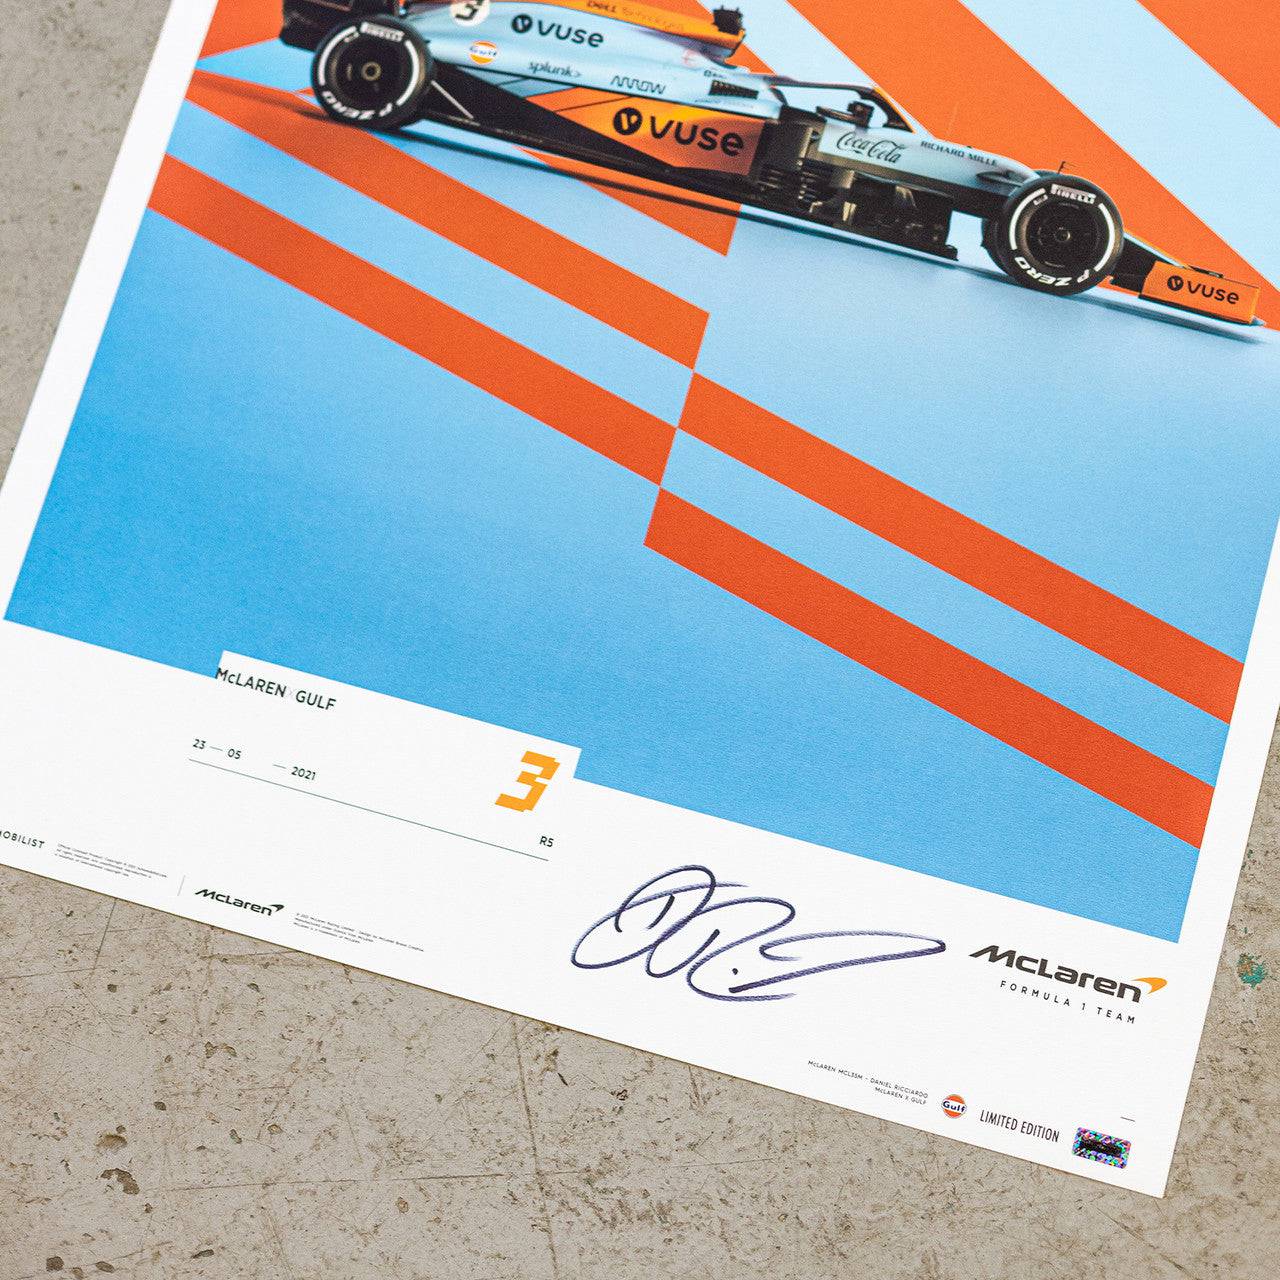 Daniel Ricciardo - McLaren x Gulf - Edition 2  - 2021 | Signed Limited Edition